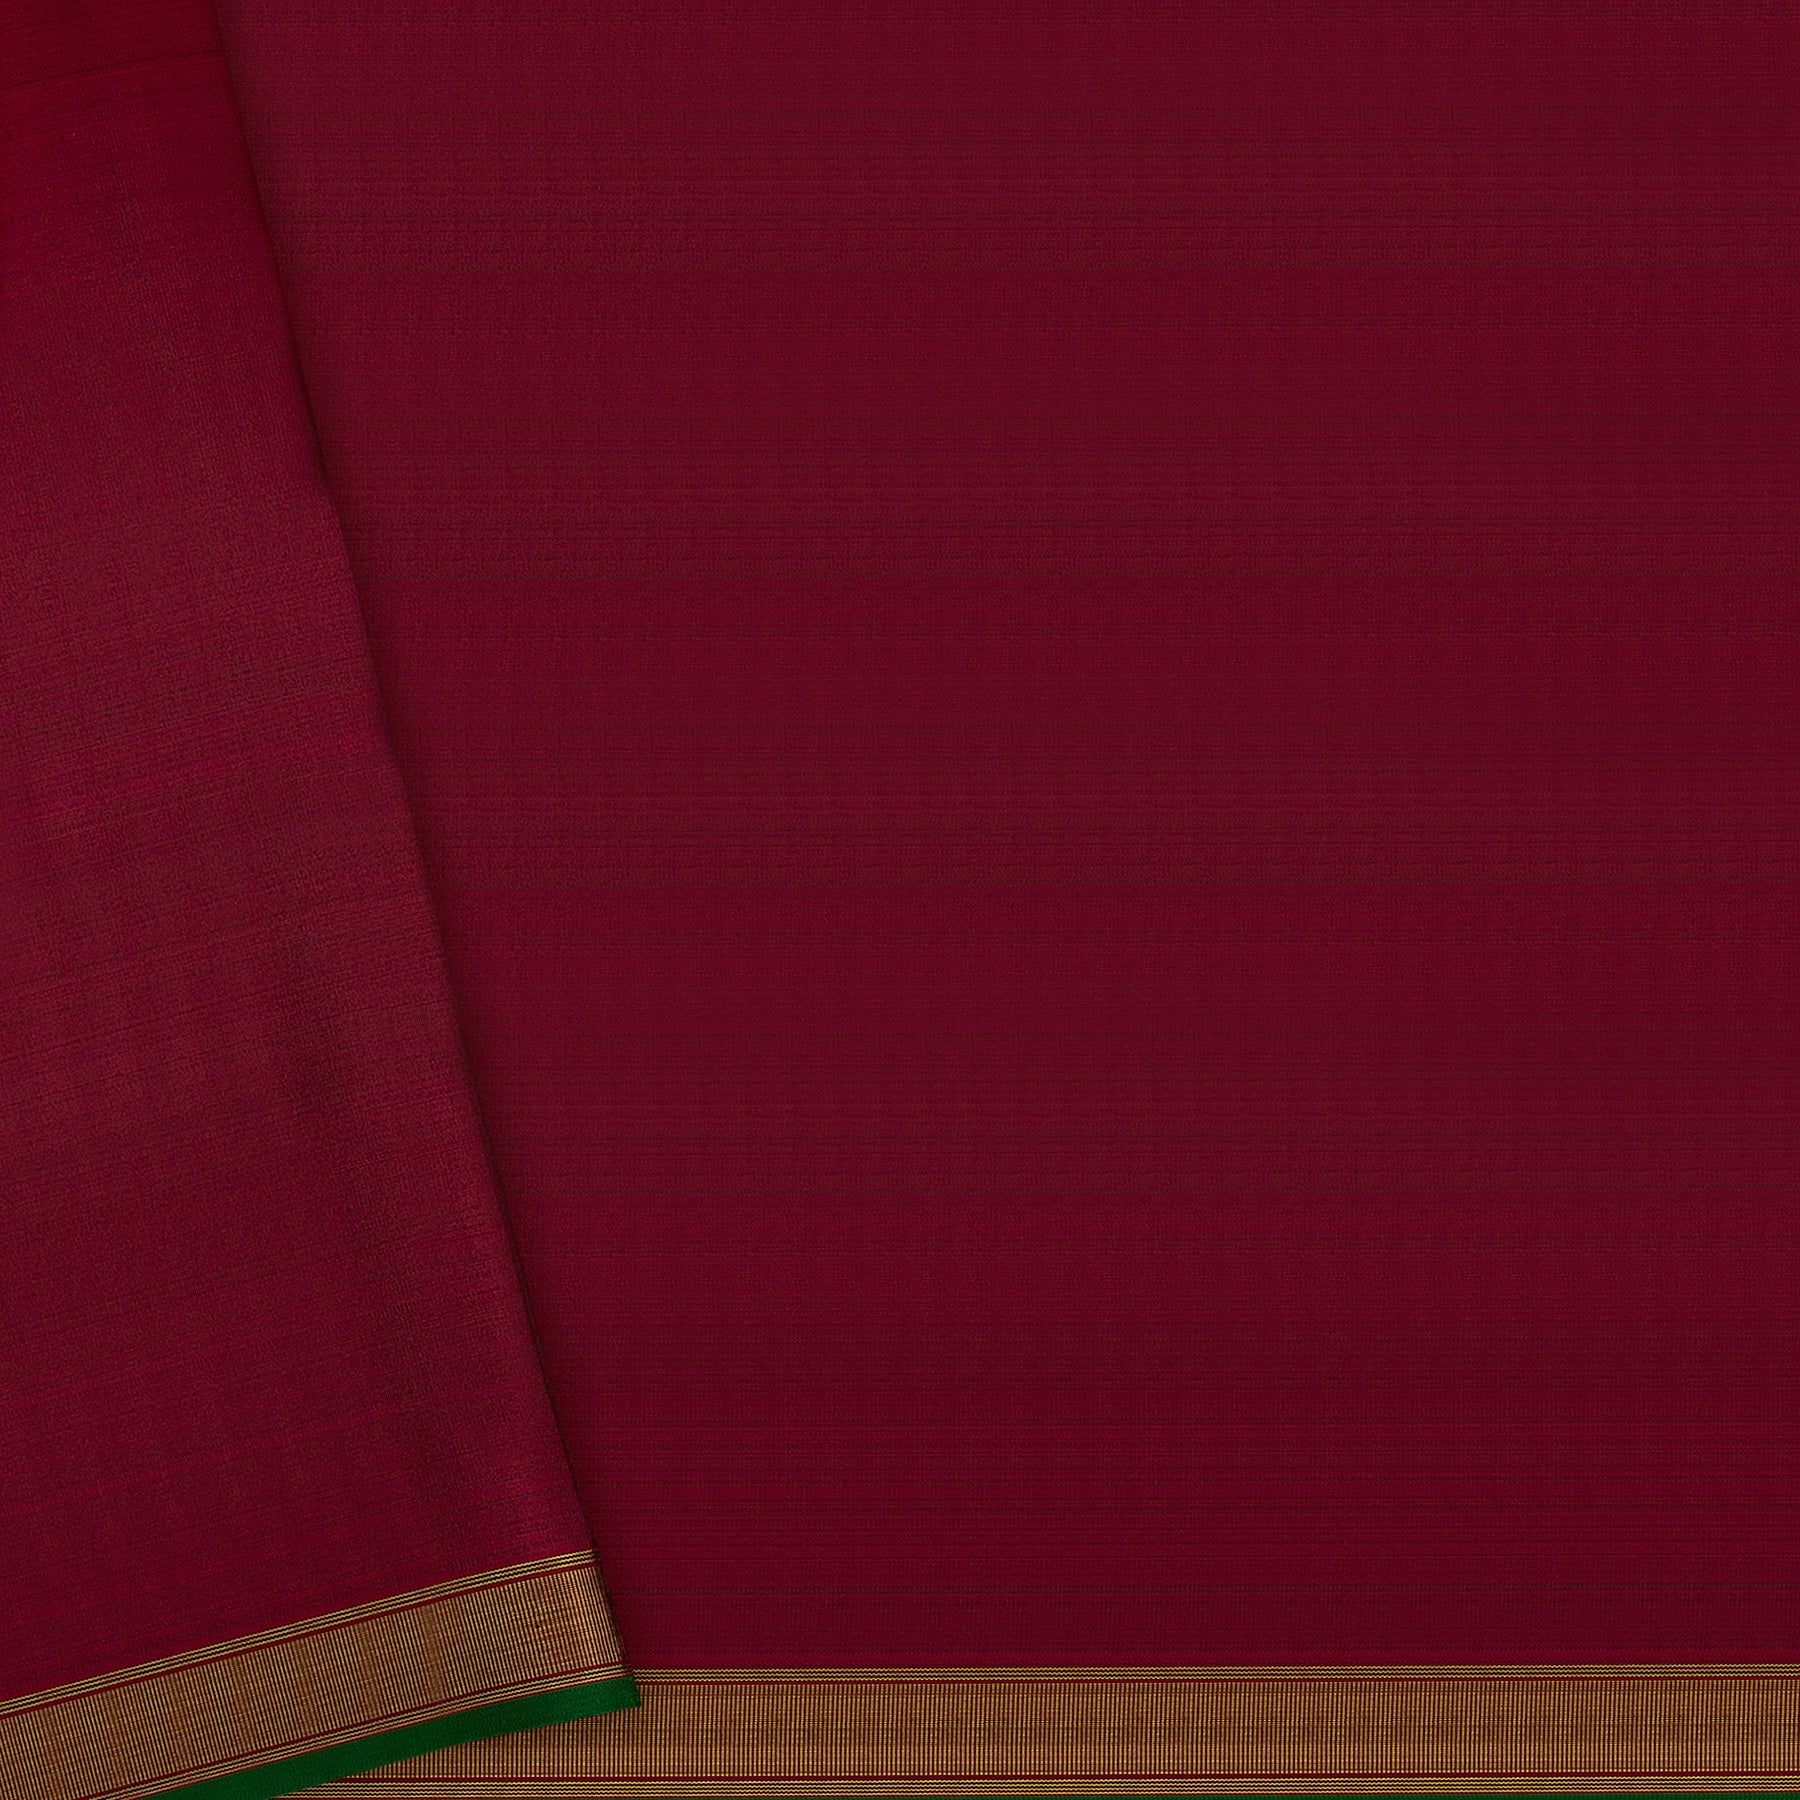 Kanakavalli Kanjivaram Silk Sari 23-599-HS001-13850 - Blouse View